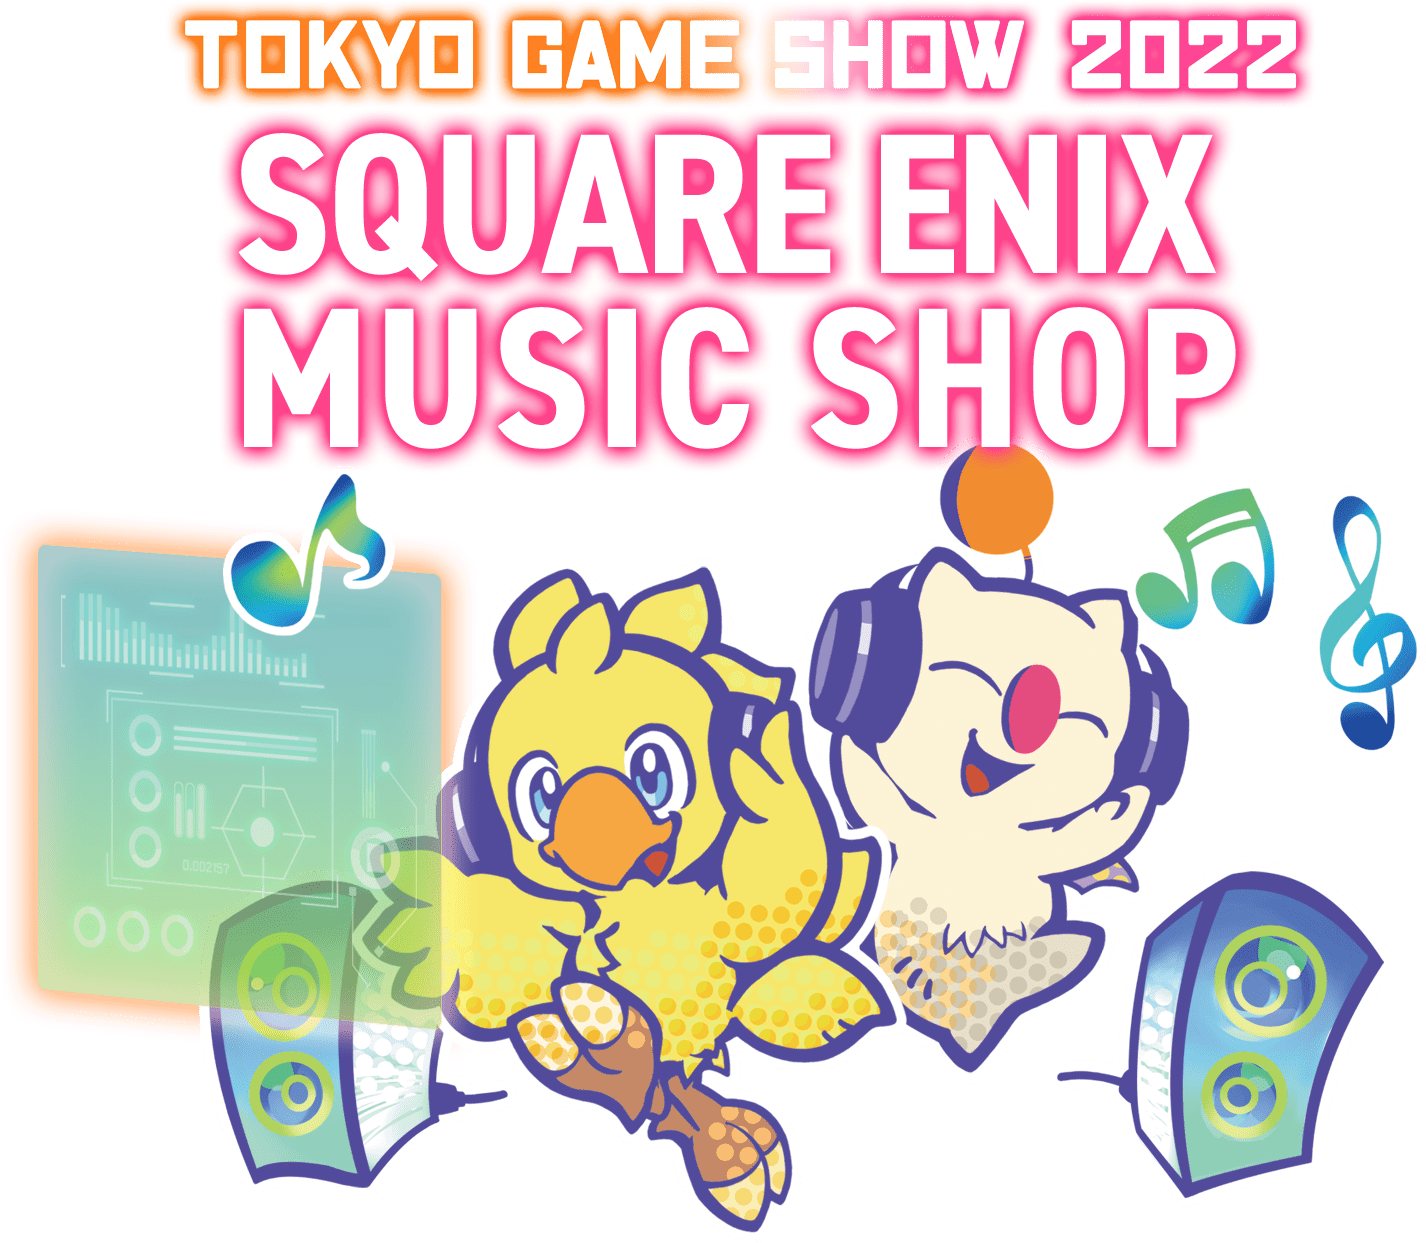 TOKYO GAME SHOW 2022 SQUARE ENIX MUSIC SHOP